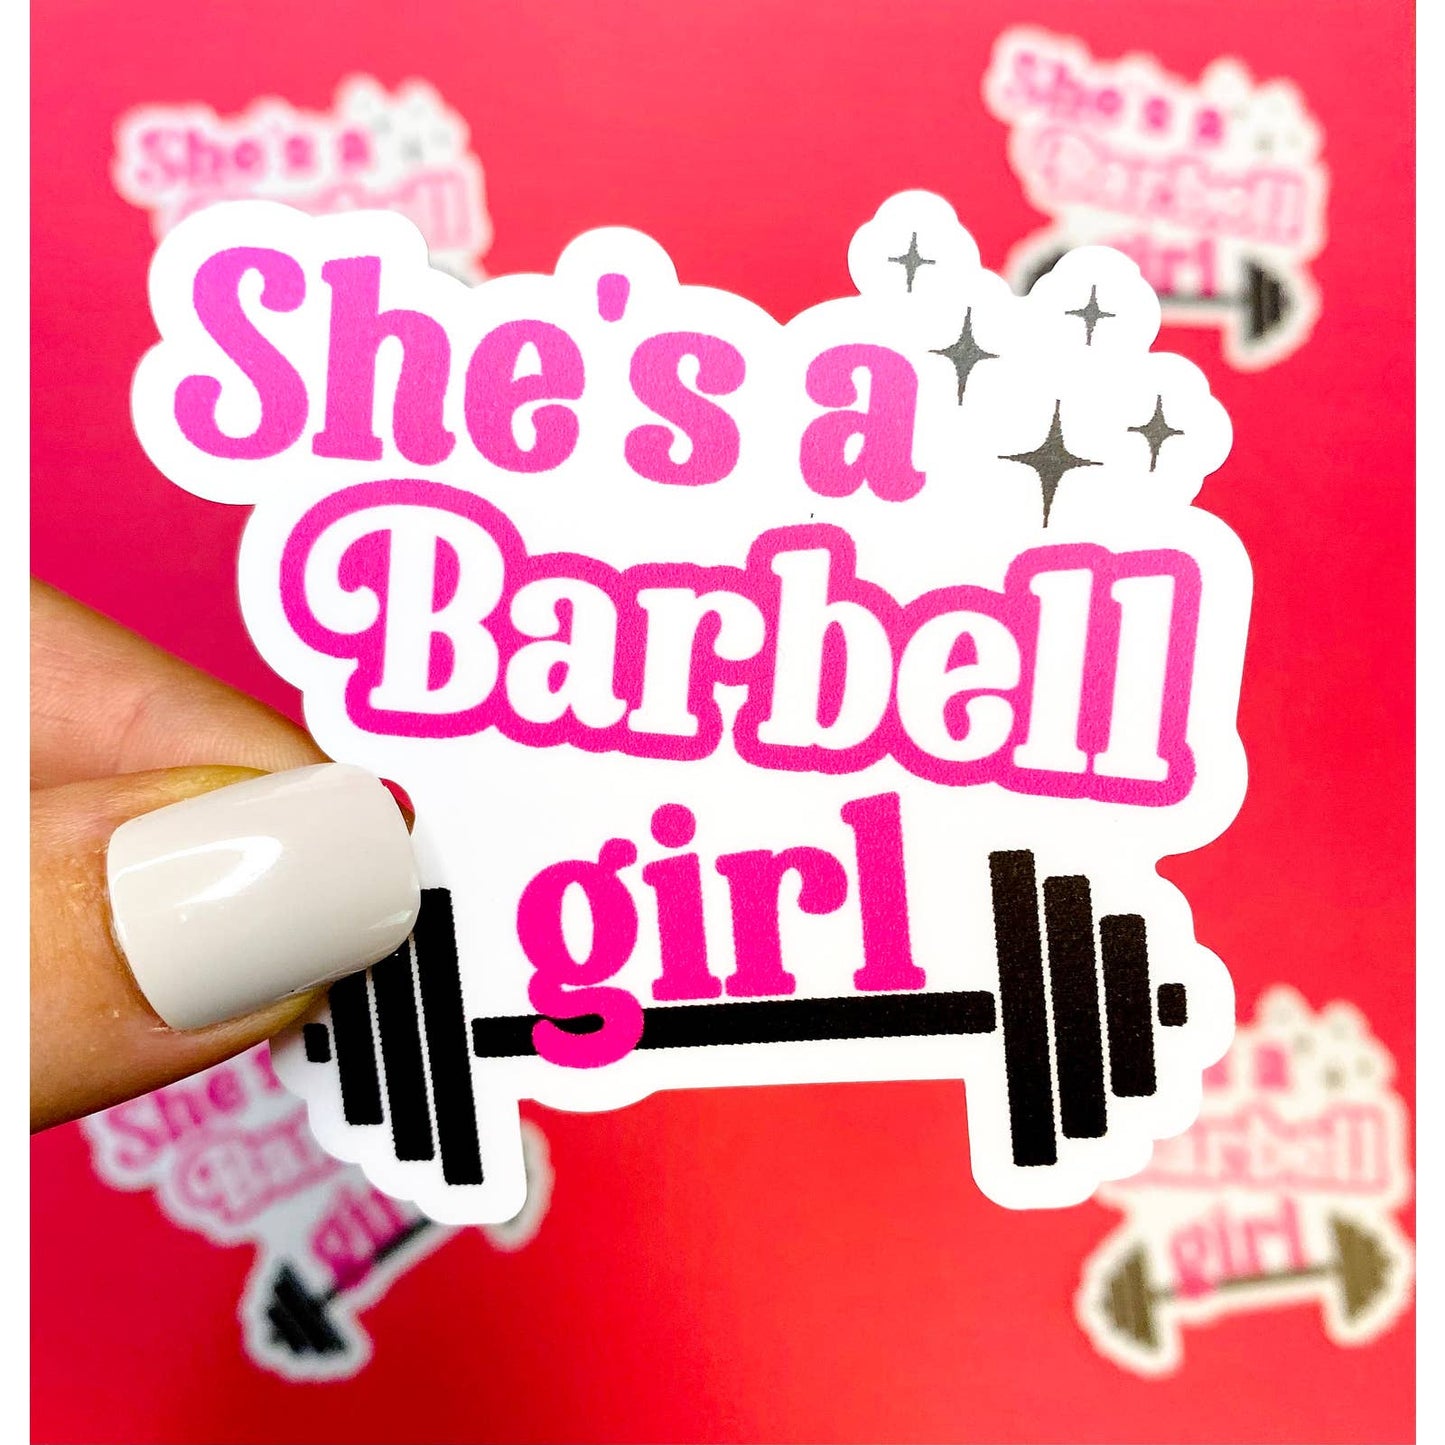 Barbell Girl Sticker - Pink Sticker for Women - Gym Girl Stickers - Weightlifting Sticker